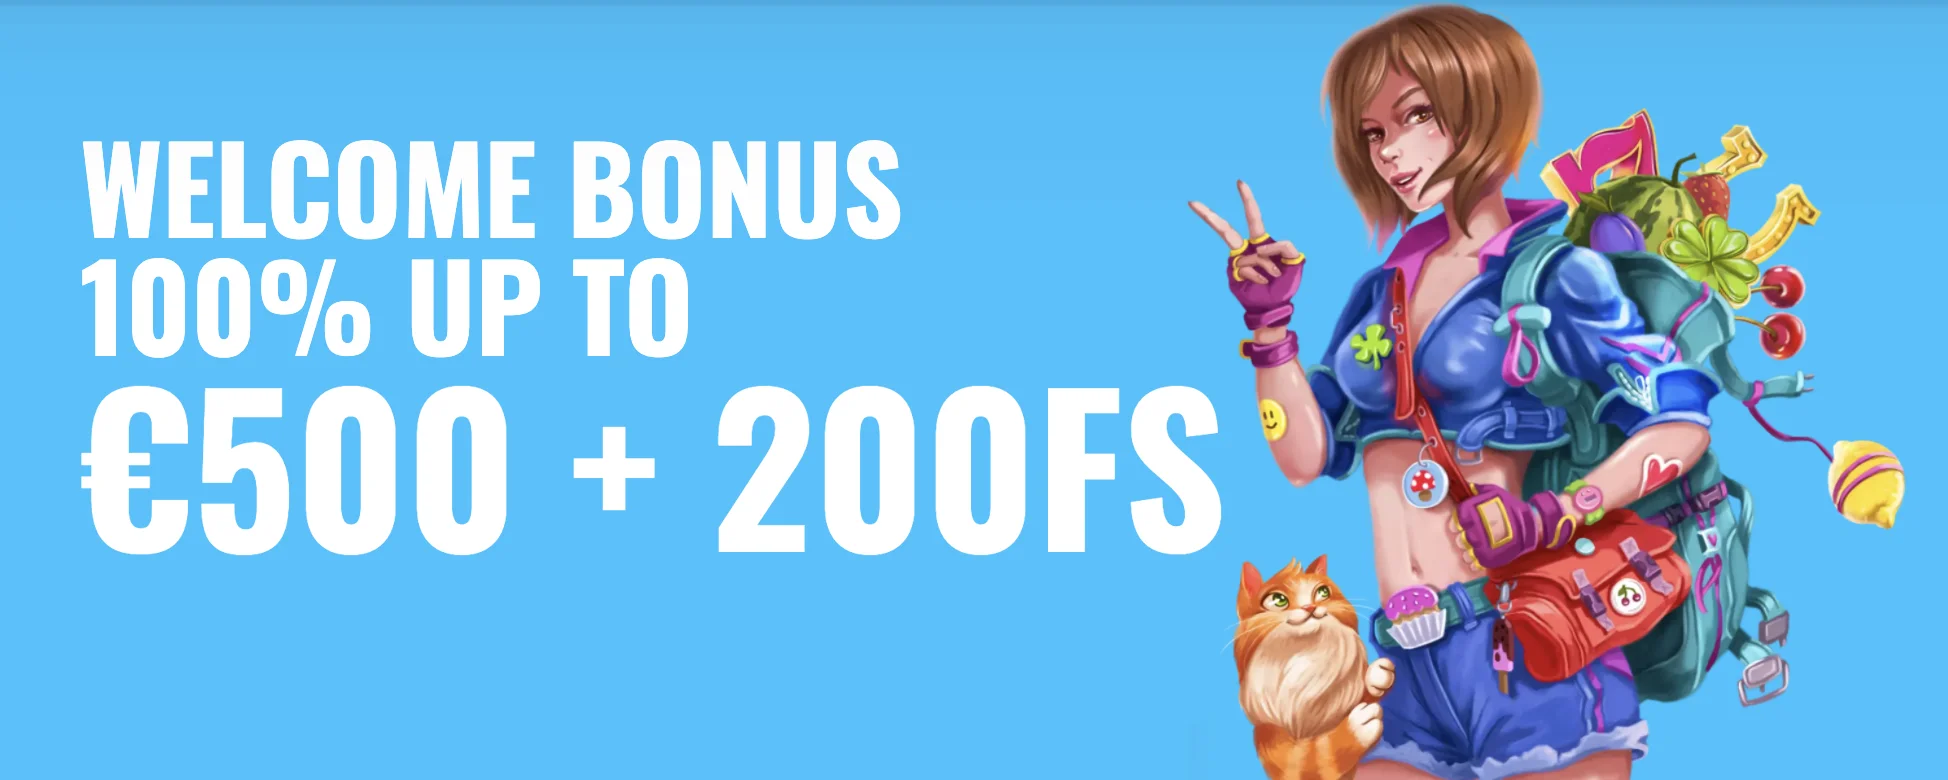 OhMySpins Casino Welcome Bonus 100% up to 500 Euros + 200 Free Spins